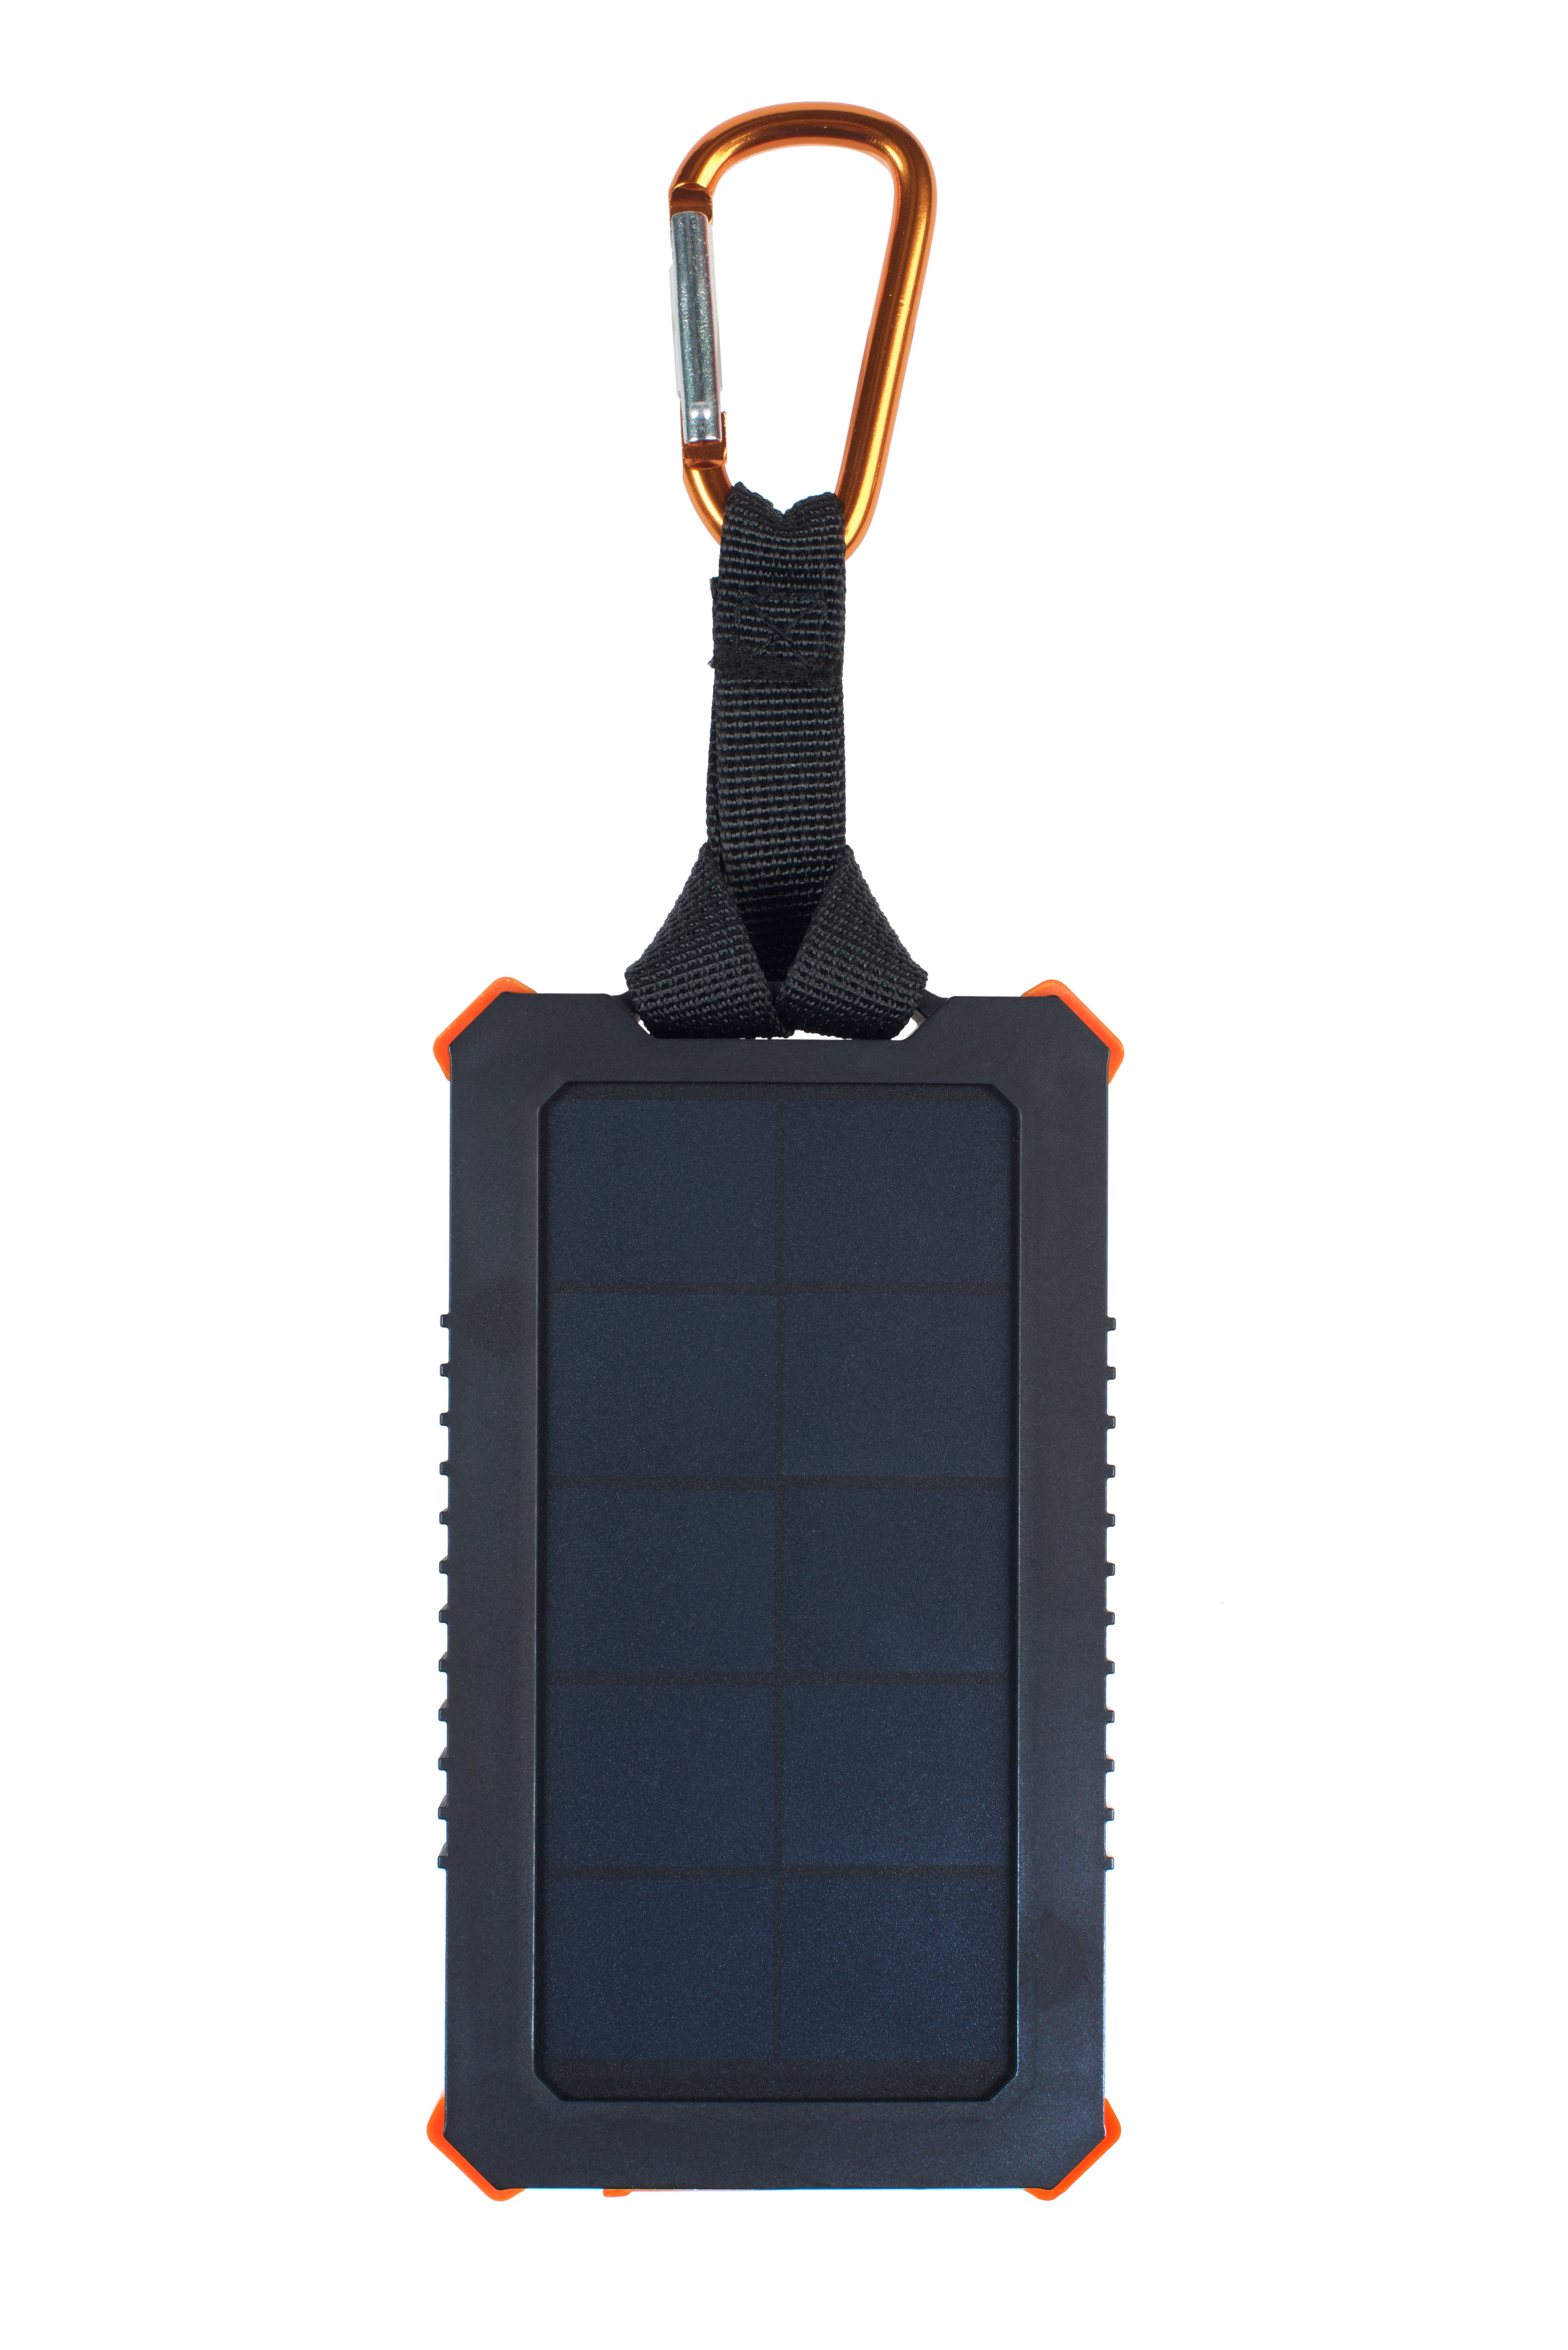 Powerbank Xtorm Xtreme Power Pack solar module 5000 mAh